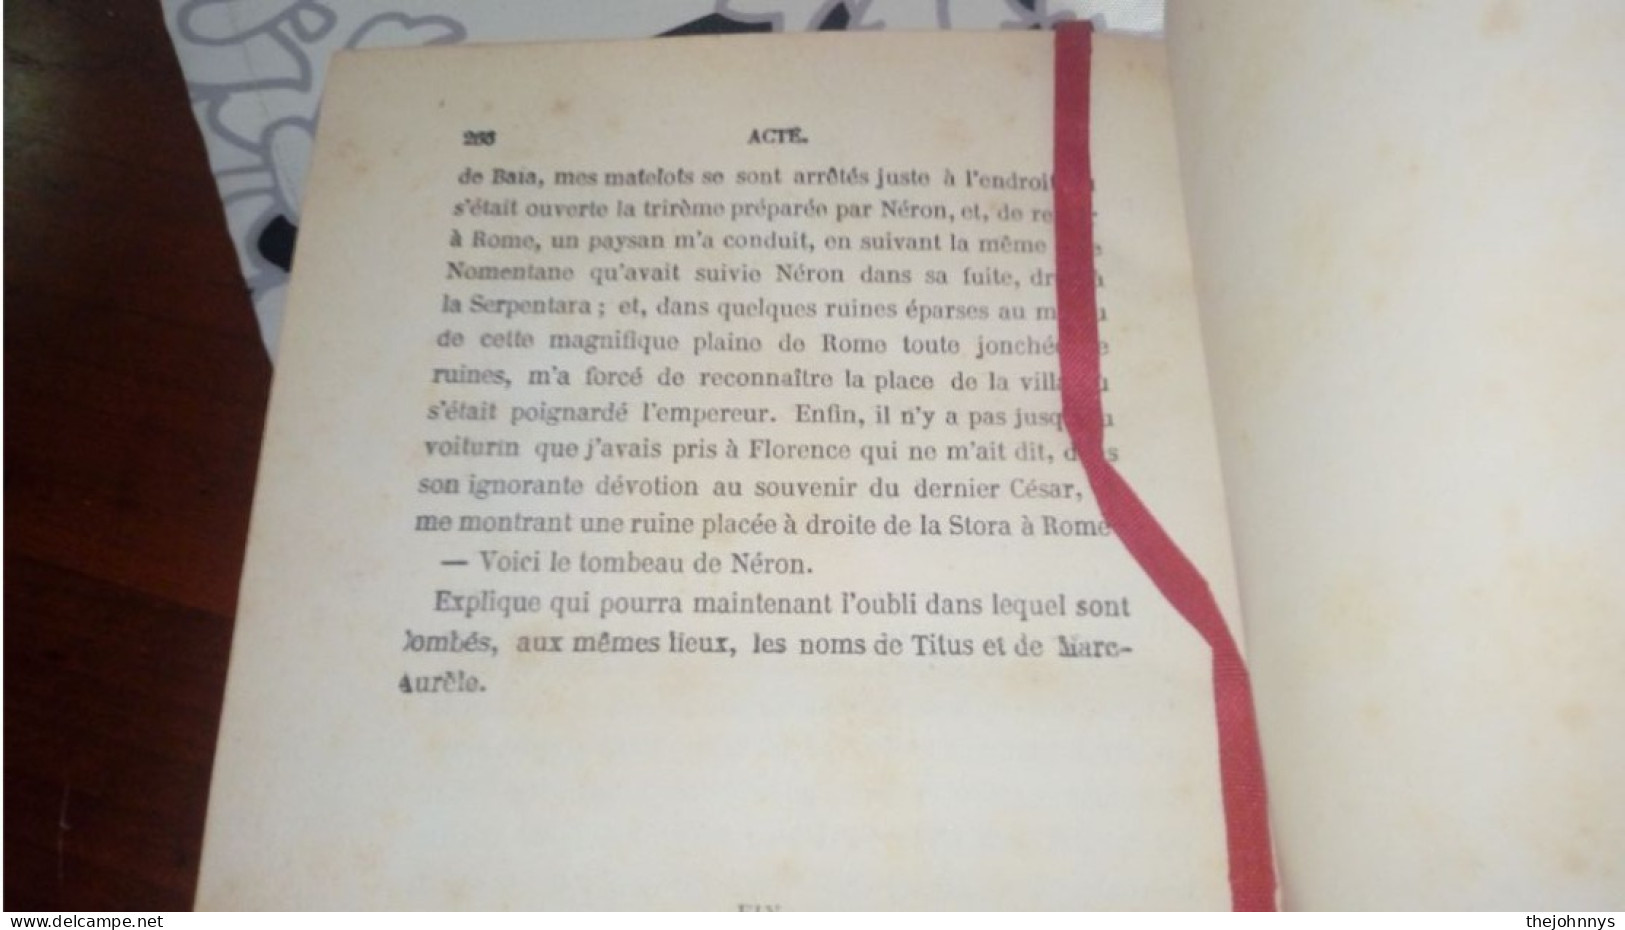 Ancien Livre A Dumas 1 Acté De 1884    265 Pages -  Monedas De Necesidad